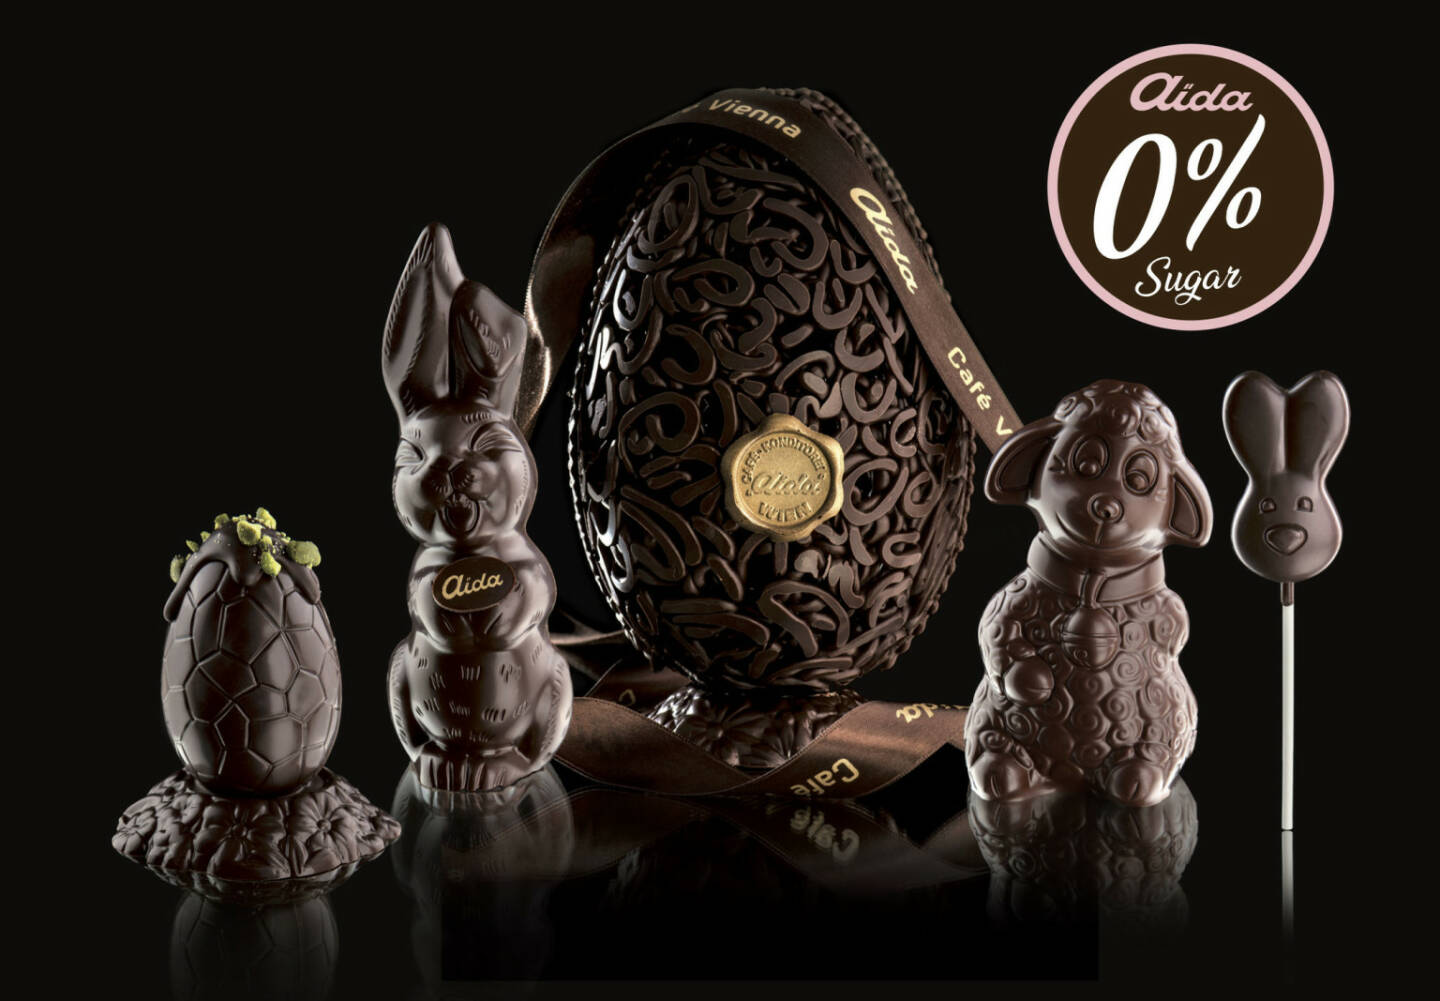 AÏDA präsentiert den 0% Zucker Schokolade-Osterhasen, Credit: Aida